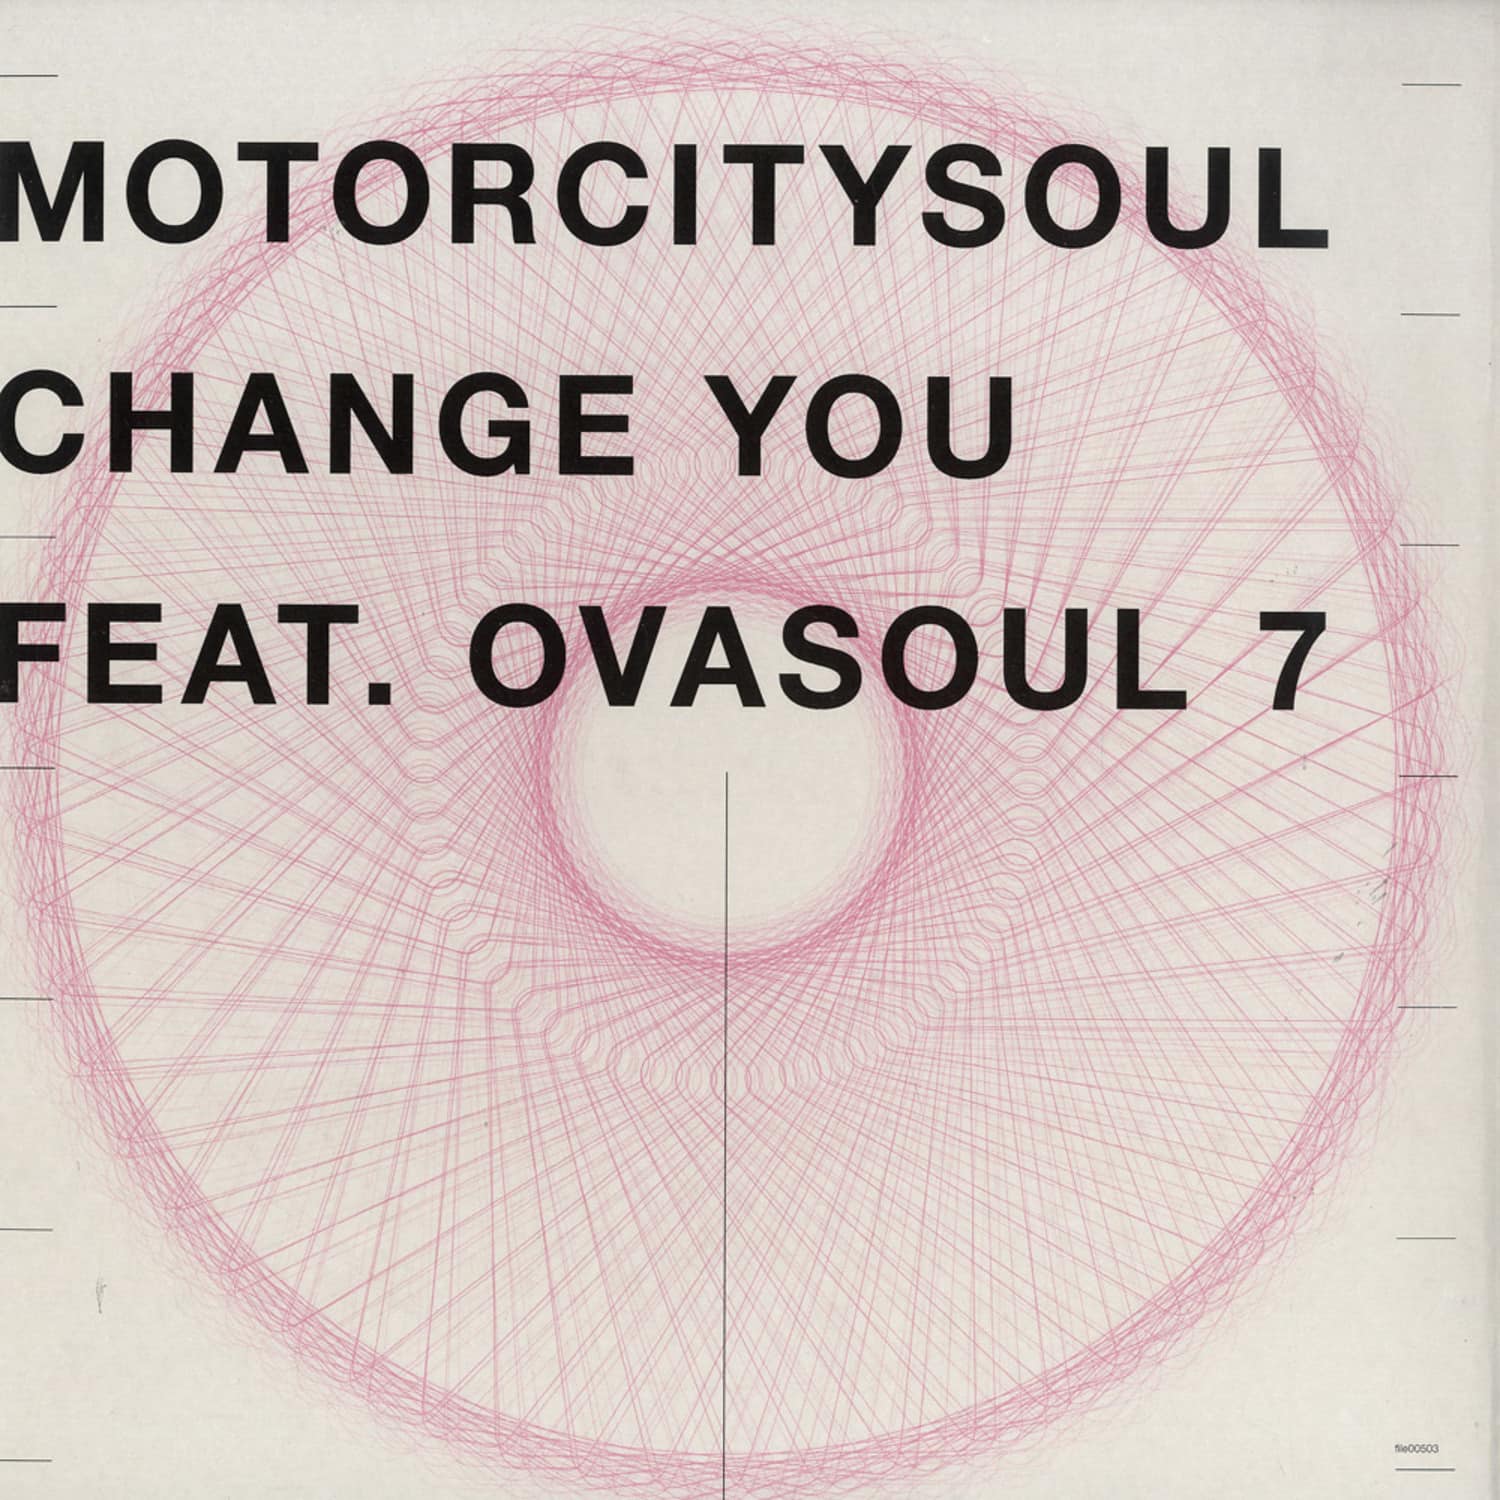 Motorcitysoul feat. Ovasoul 7 - CHANGE YOU